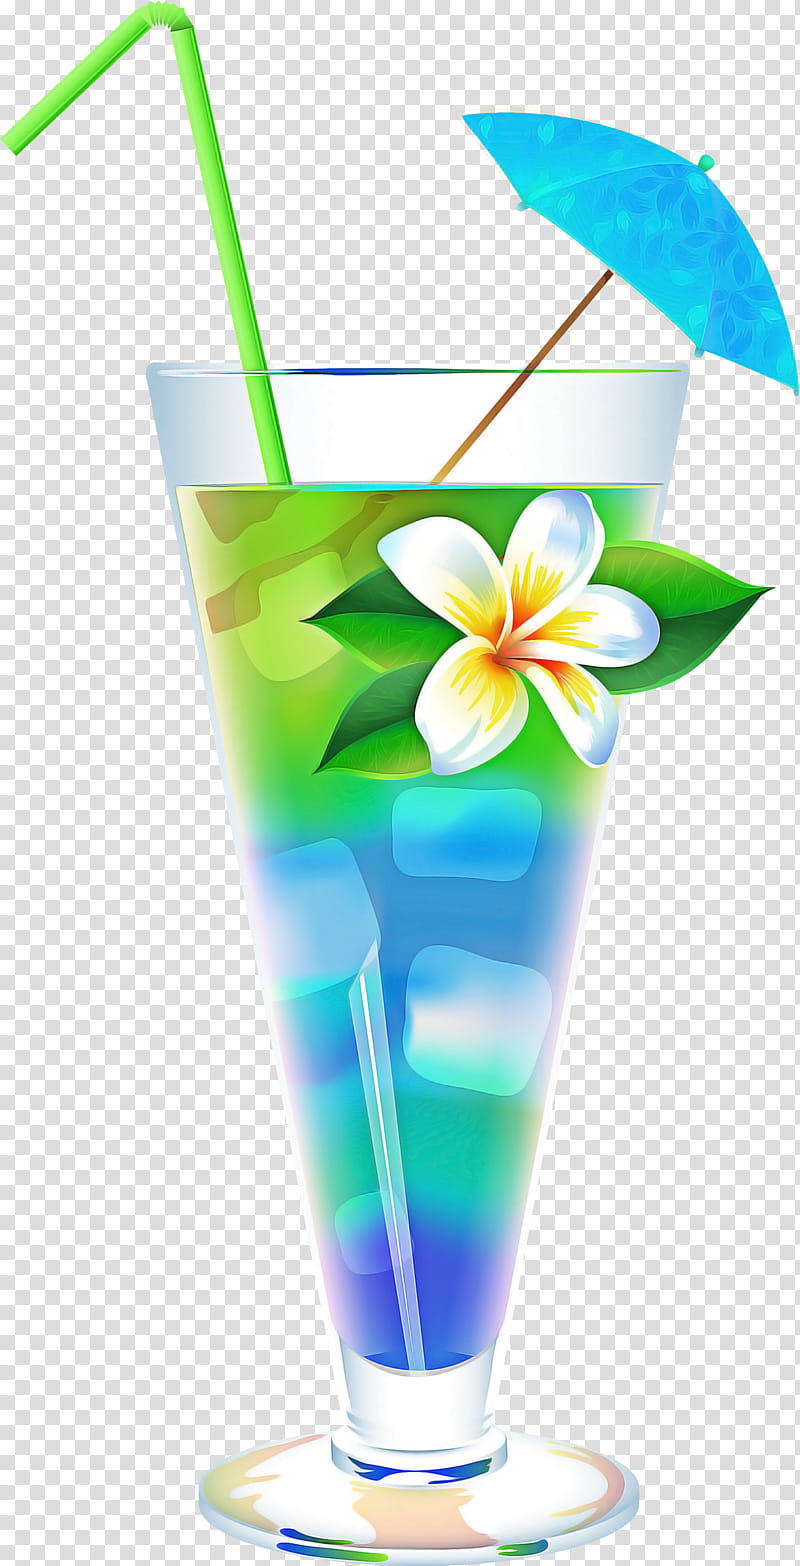 Margarita, Blue Hawaii, Cocktail Garnish, Nonalcoholic Drink, Sea Breeze, Vodka, Martini, Hurricane transparent background PNG clipart